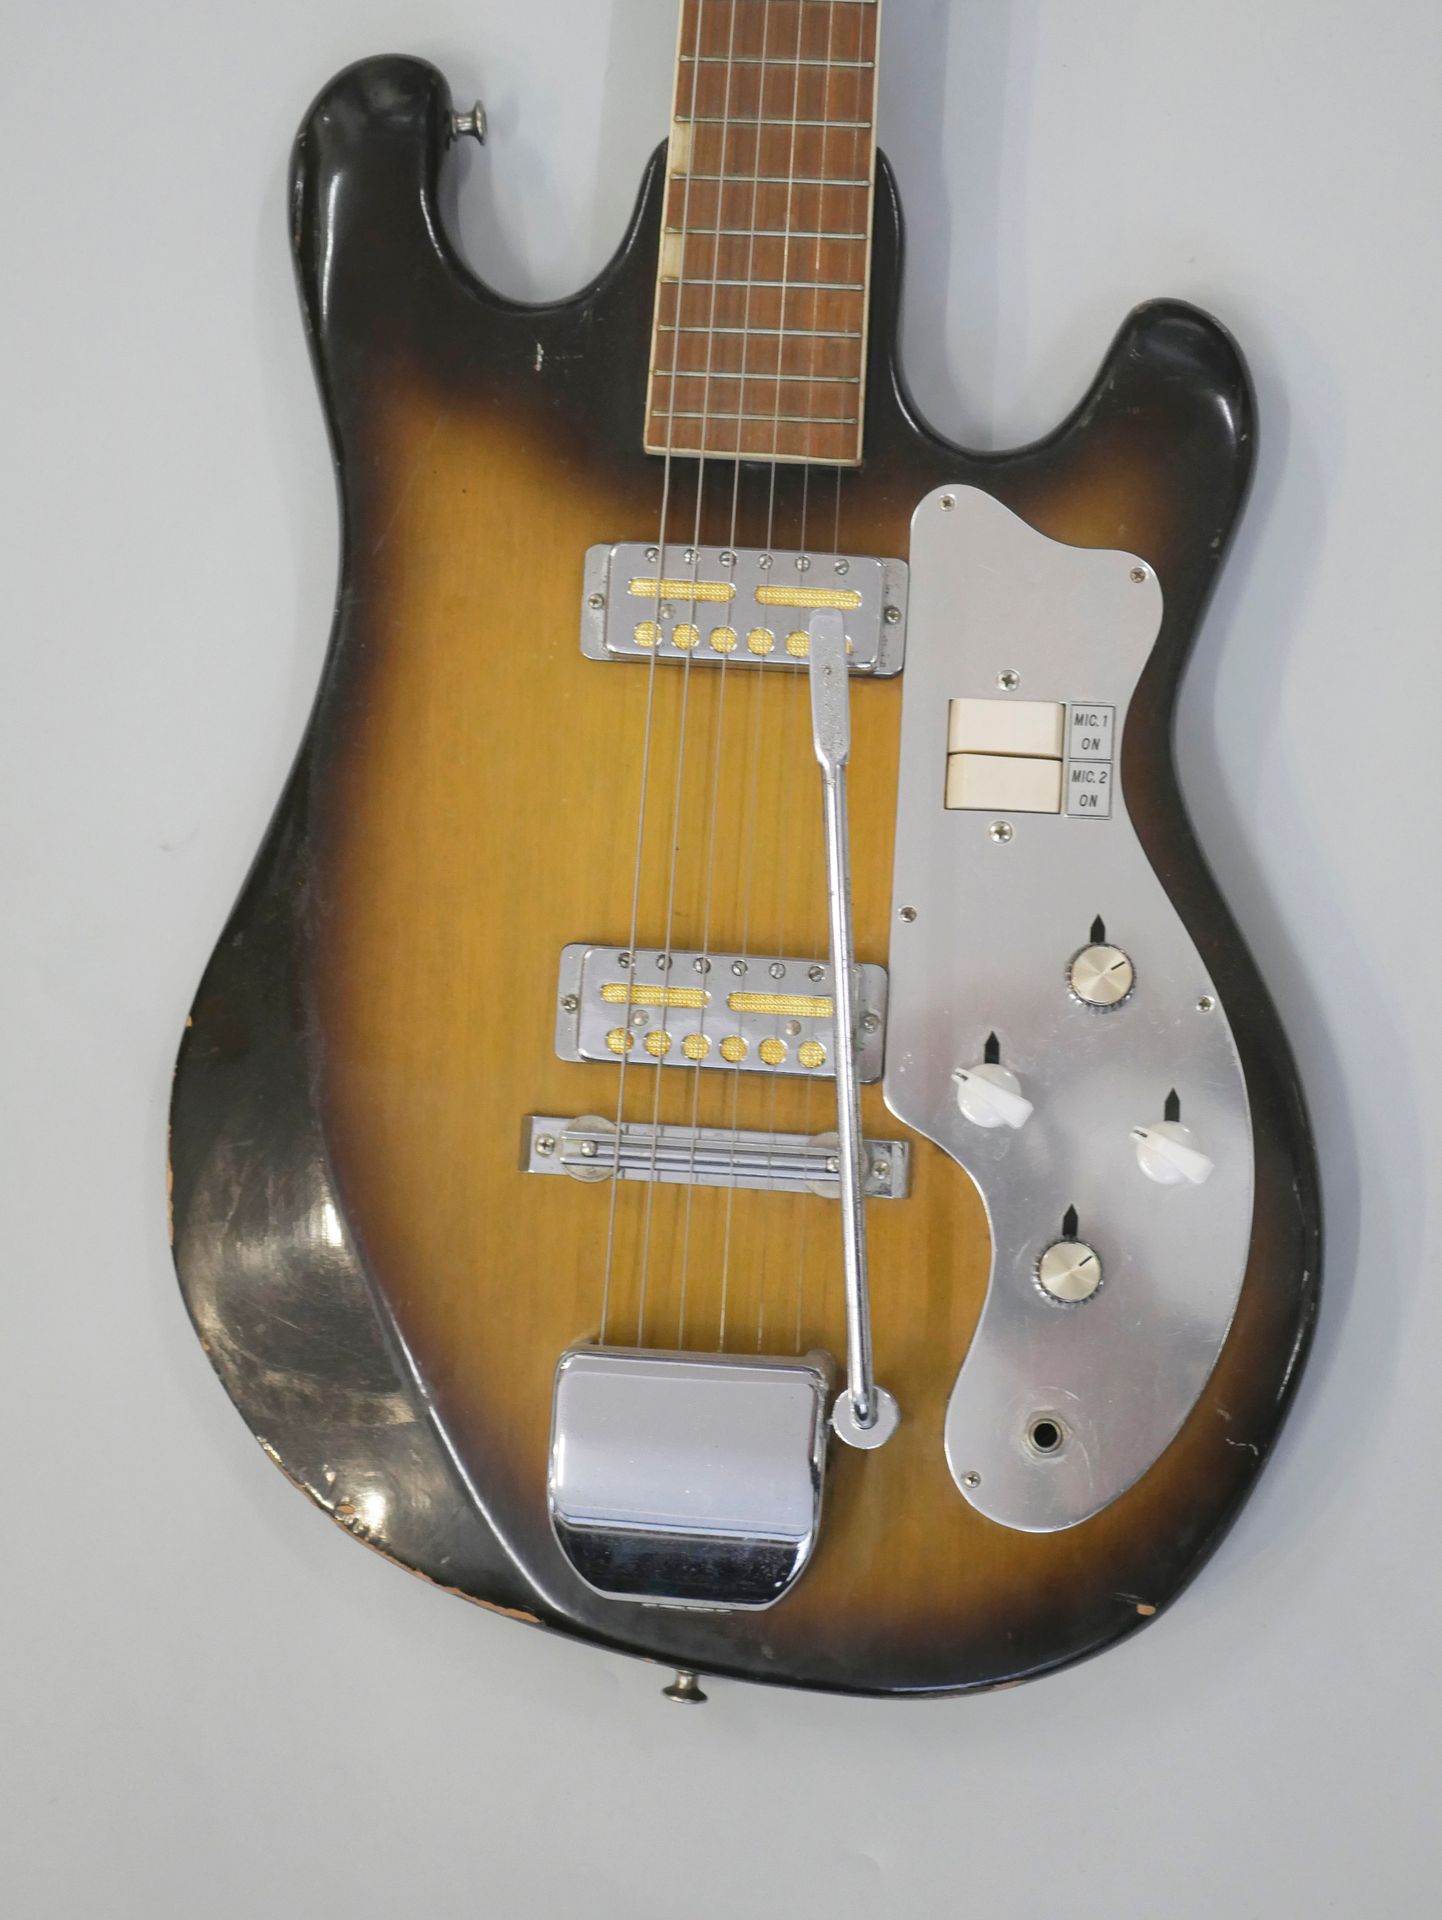 Null 实体电吉他Kent 431型，1970年左右在日本制造，Sunburst漆面。

状况良好，有使用痕迹，清漆有磨损。

(电子元件已检查并待清洁)